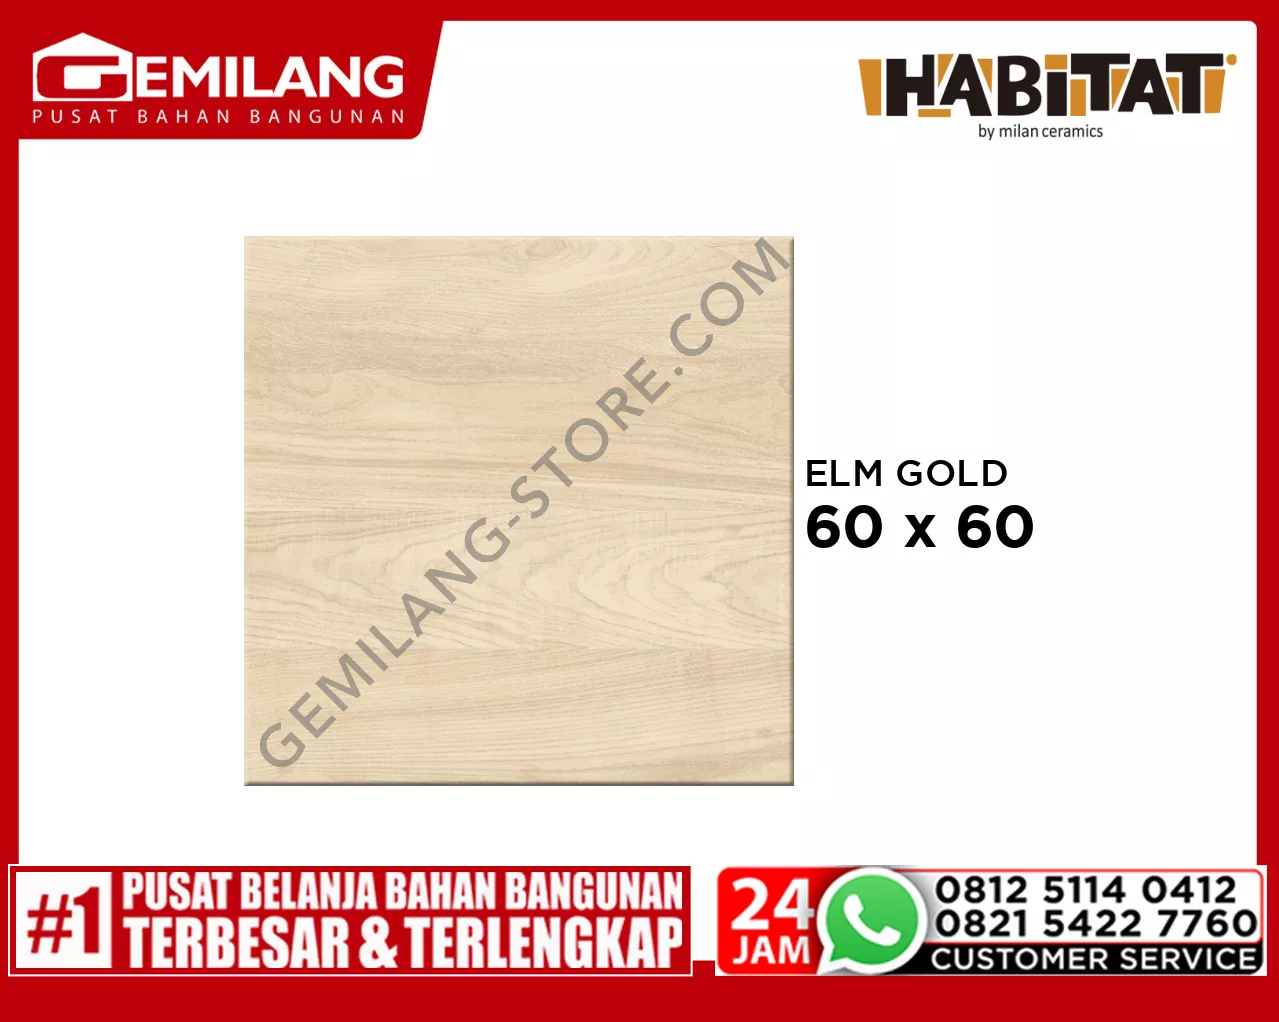 HABITAT ELM GOLD 60 x 60